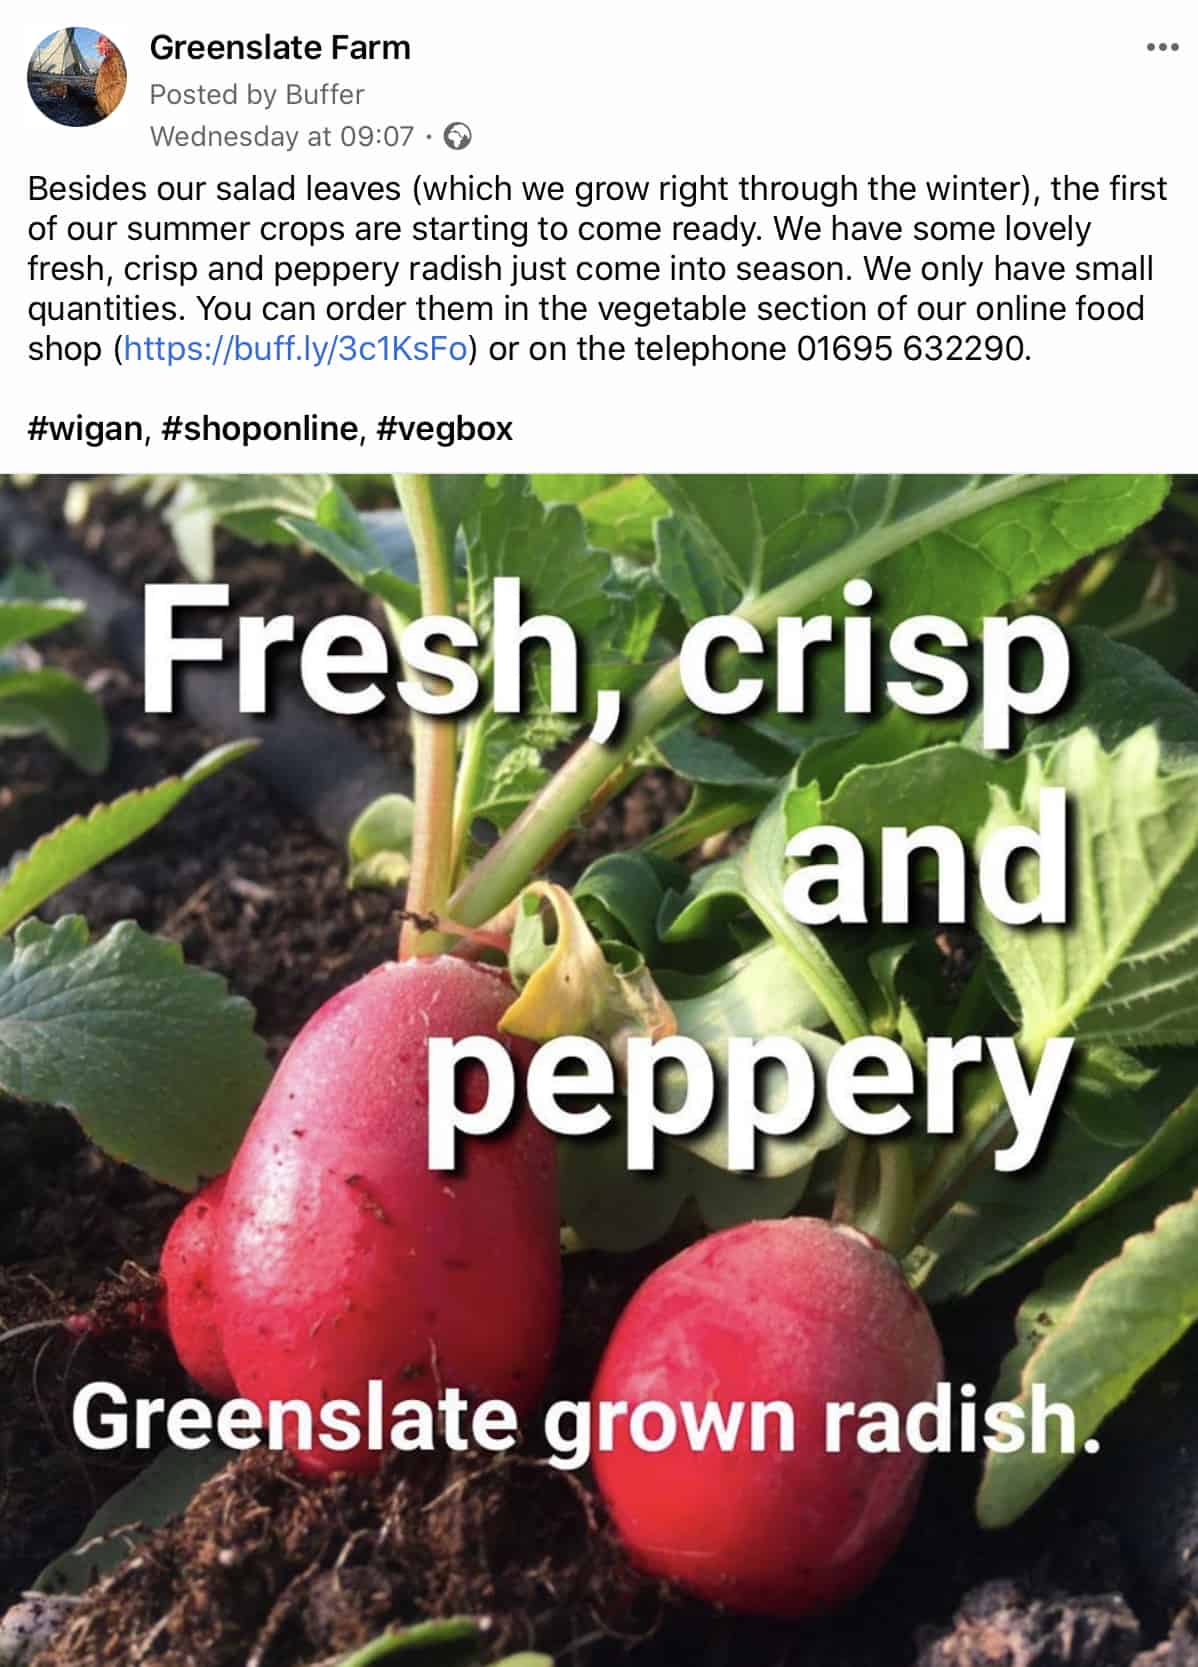 Post about Greenslate Radish